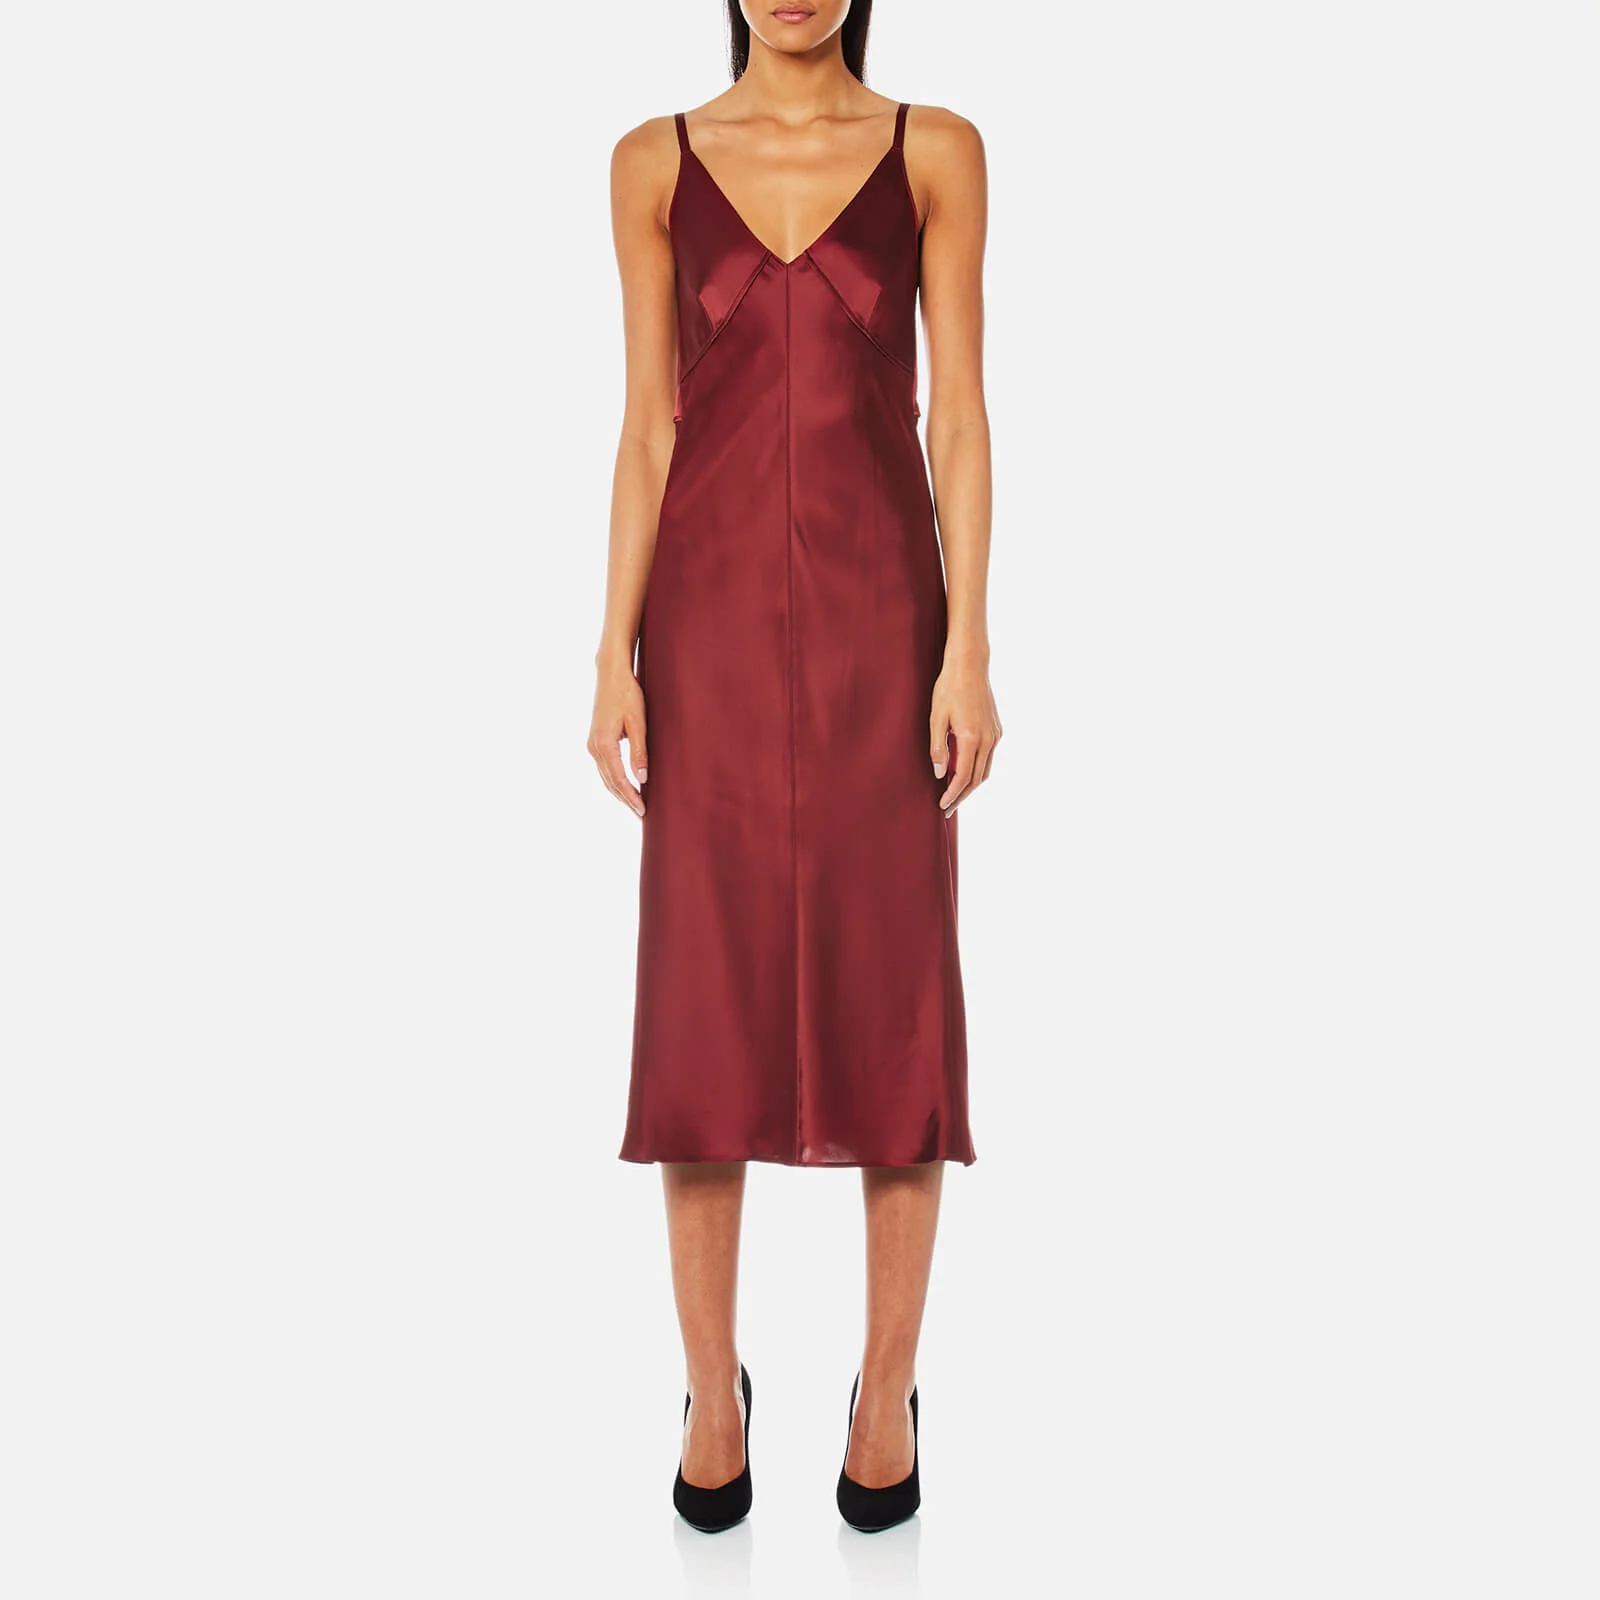 Helmut Lang Women's Deconstructed Slip Dress - Ruby Image 1